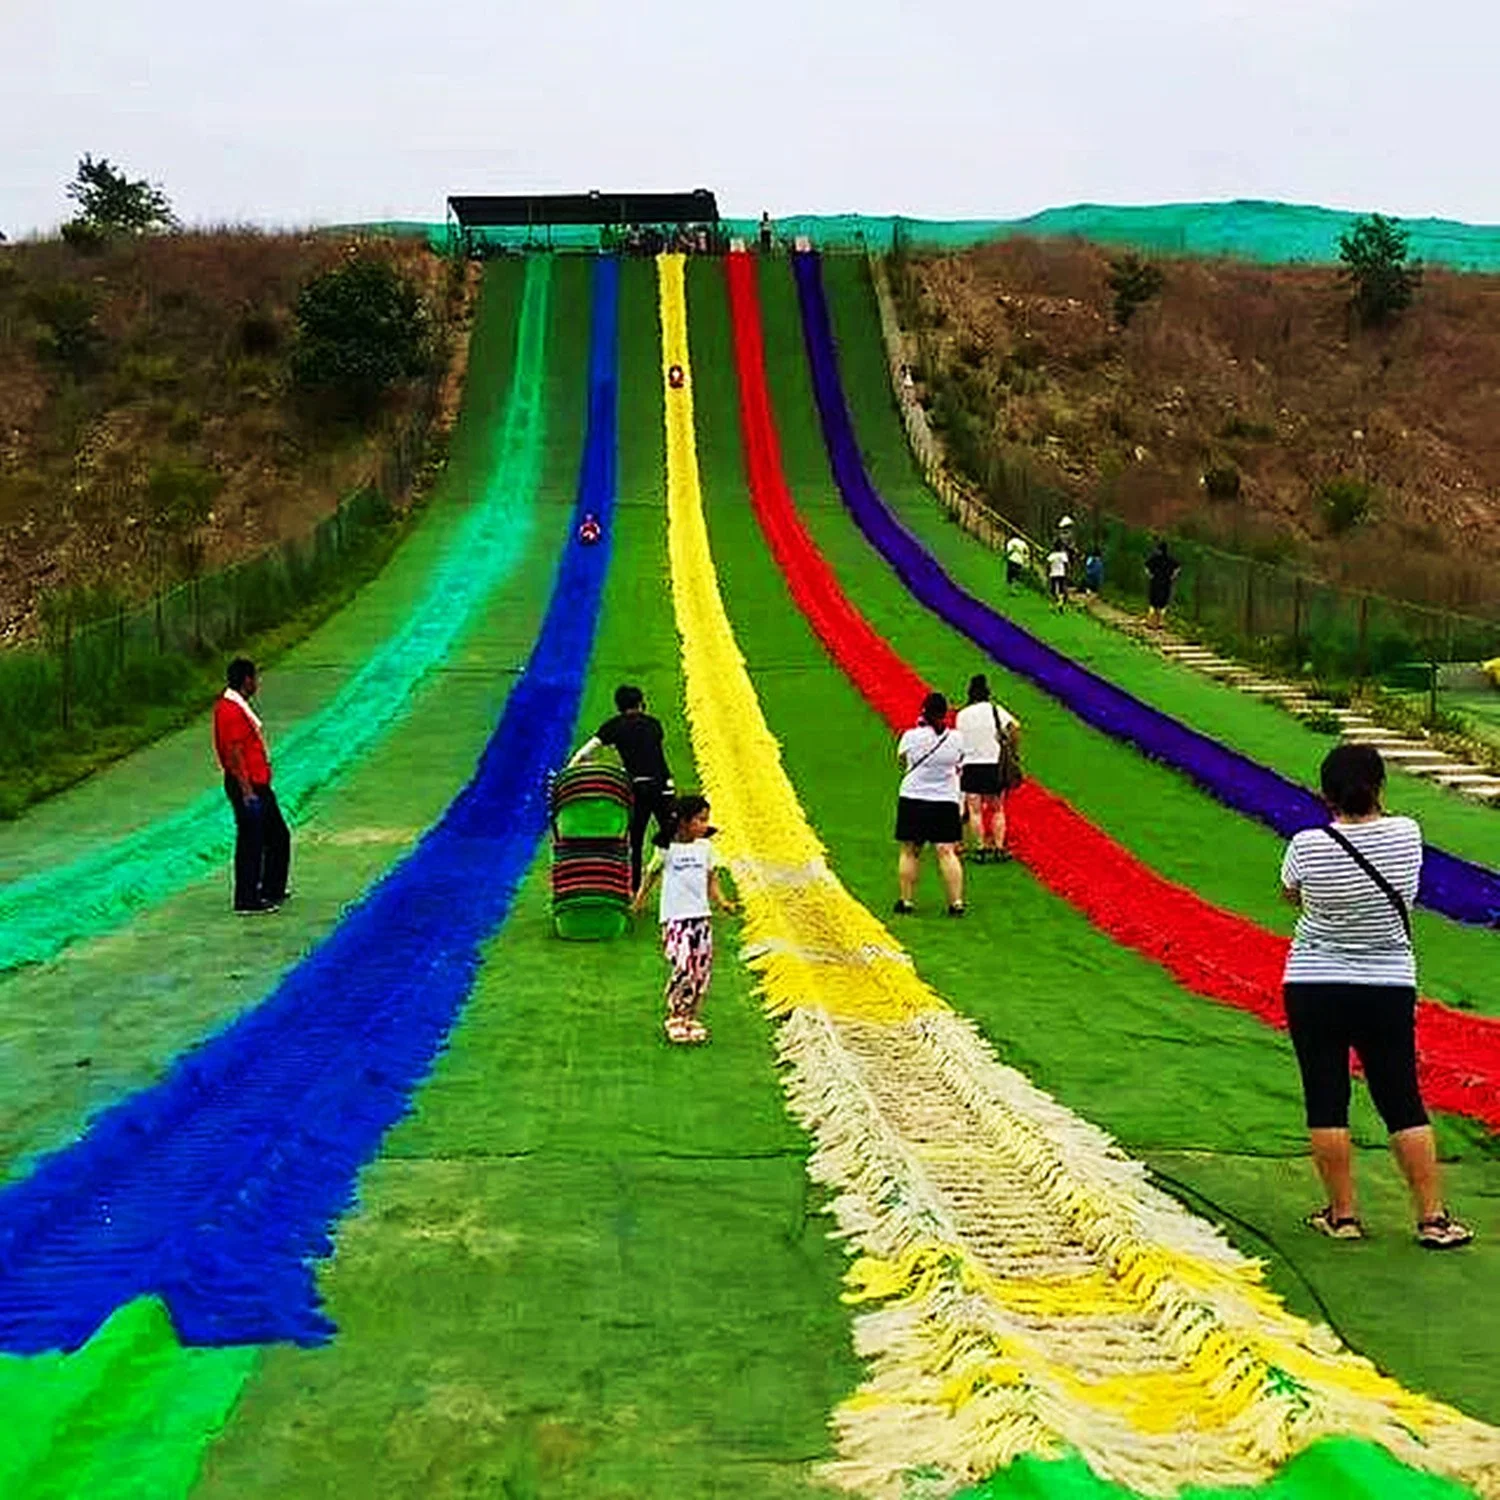 Scenic Outdoor Grass Rainbow Slide Kids Farm Park Playground Equipment